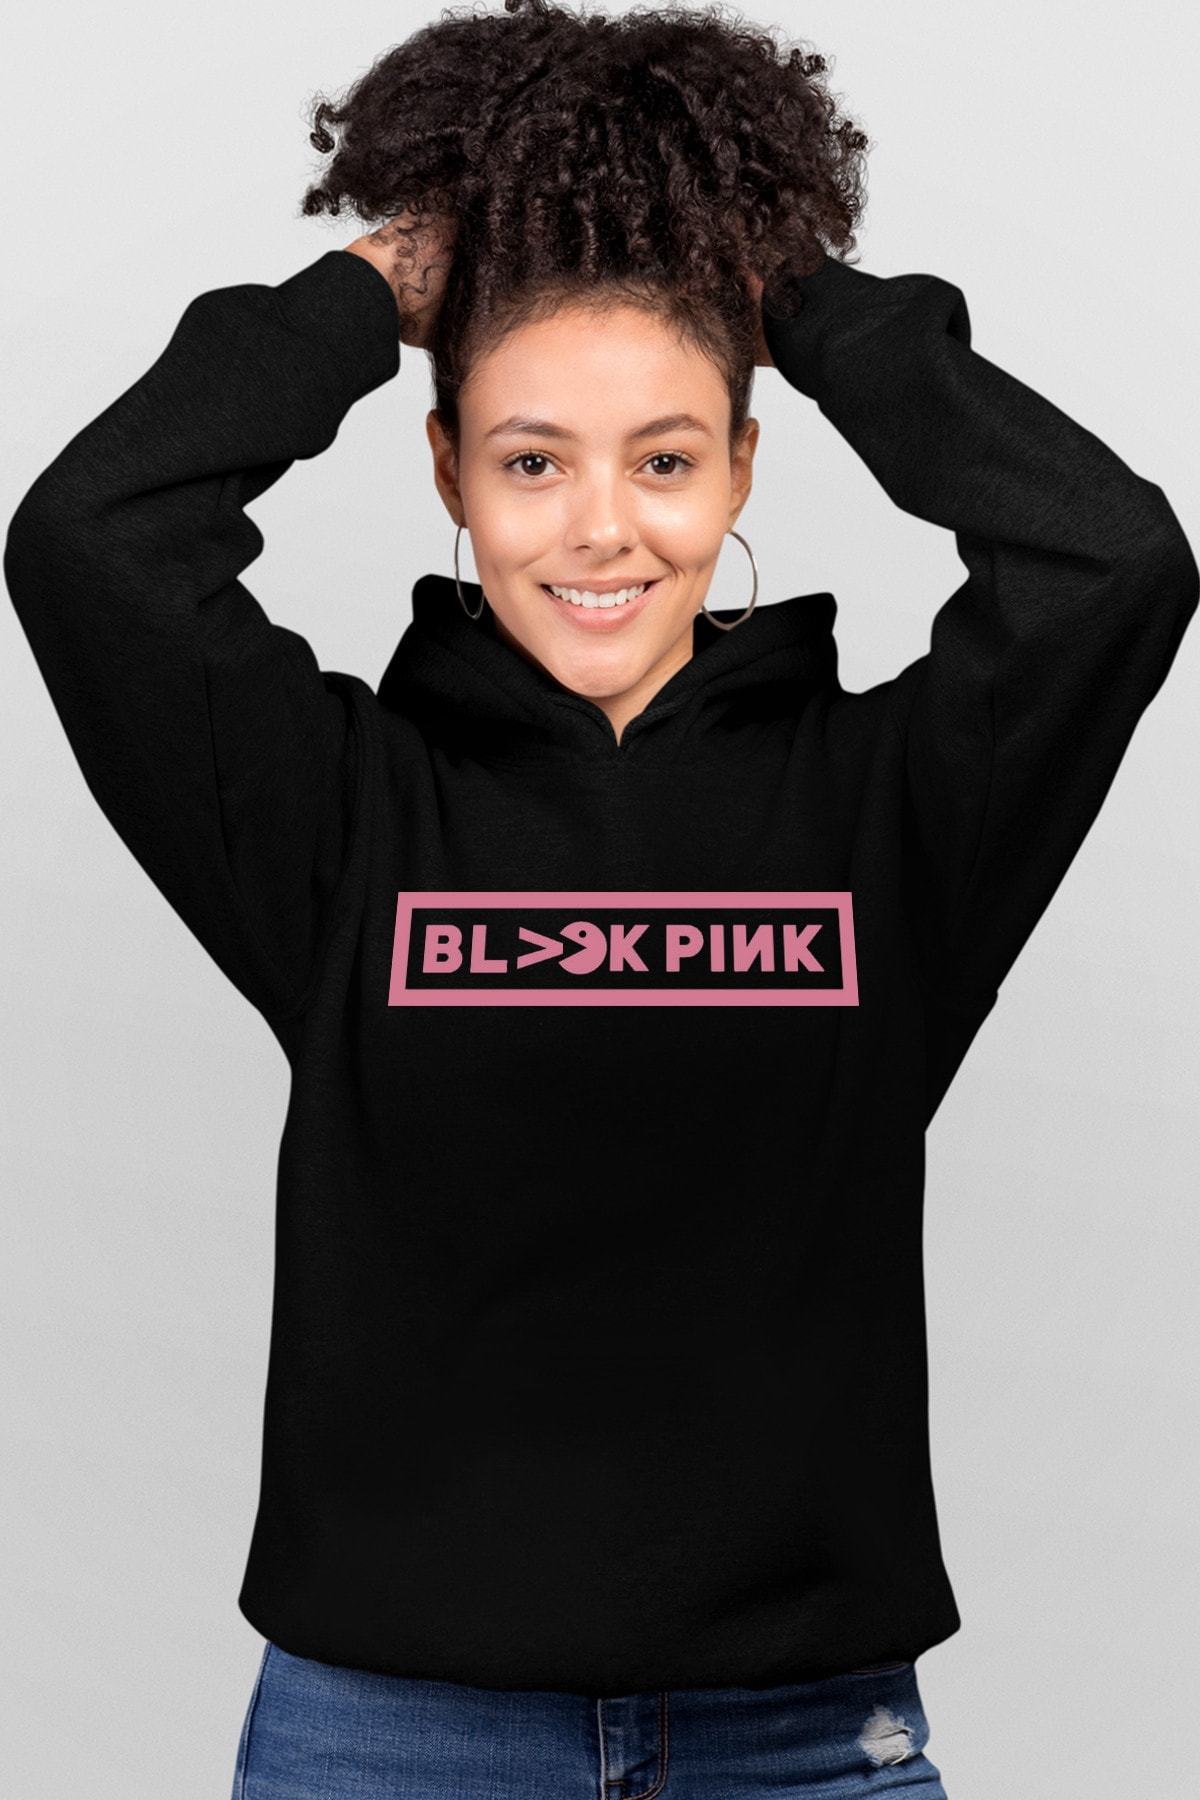 BlackPink Pac Black Hoodie Women Sweatshirt - Blackpink Hoodie Girl Sweatshirt - Kpop - Lalisa, Park Chae, Jennie, Kim Ji-soo KPS2007 S / TURKEY Official Korean Pop Merch